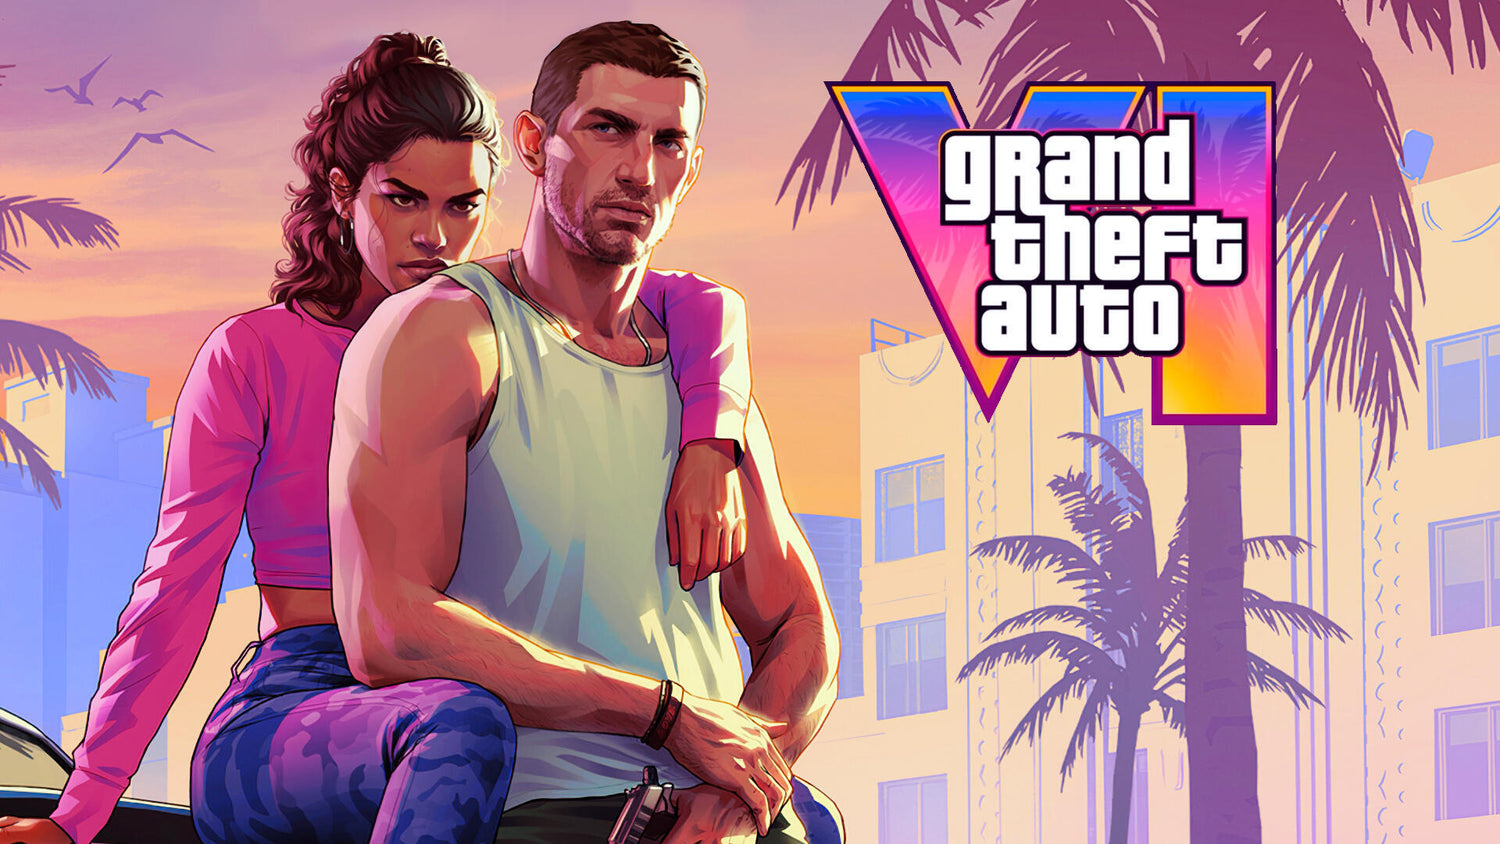 El tráiler de Grand Theft Auto VI rompe un récord | #TuDosisGeek